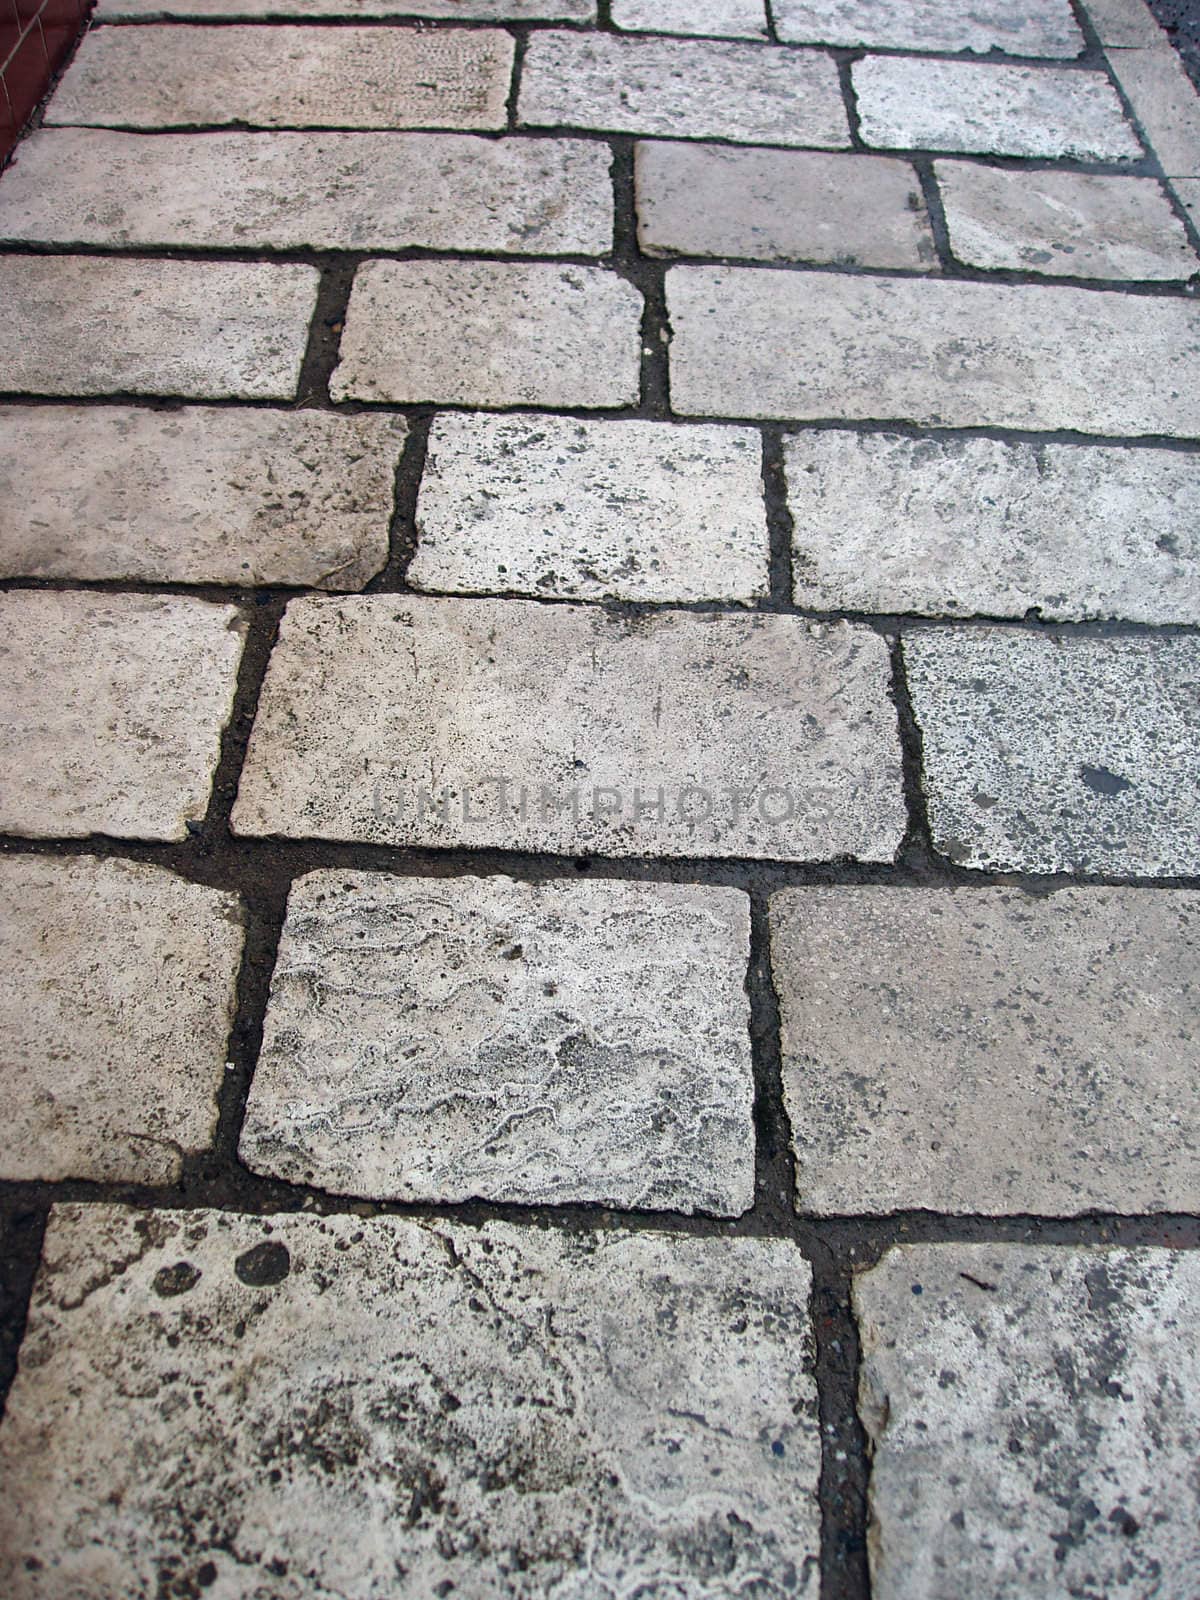 Stone tiles on walkway by jol66